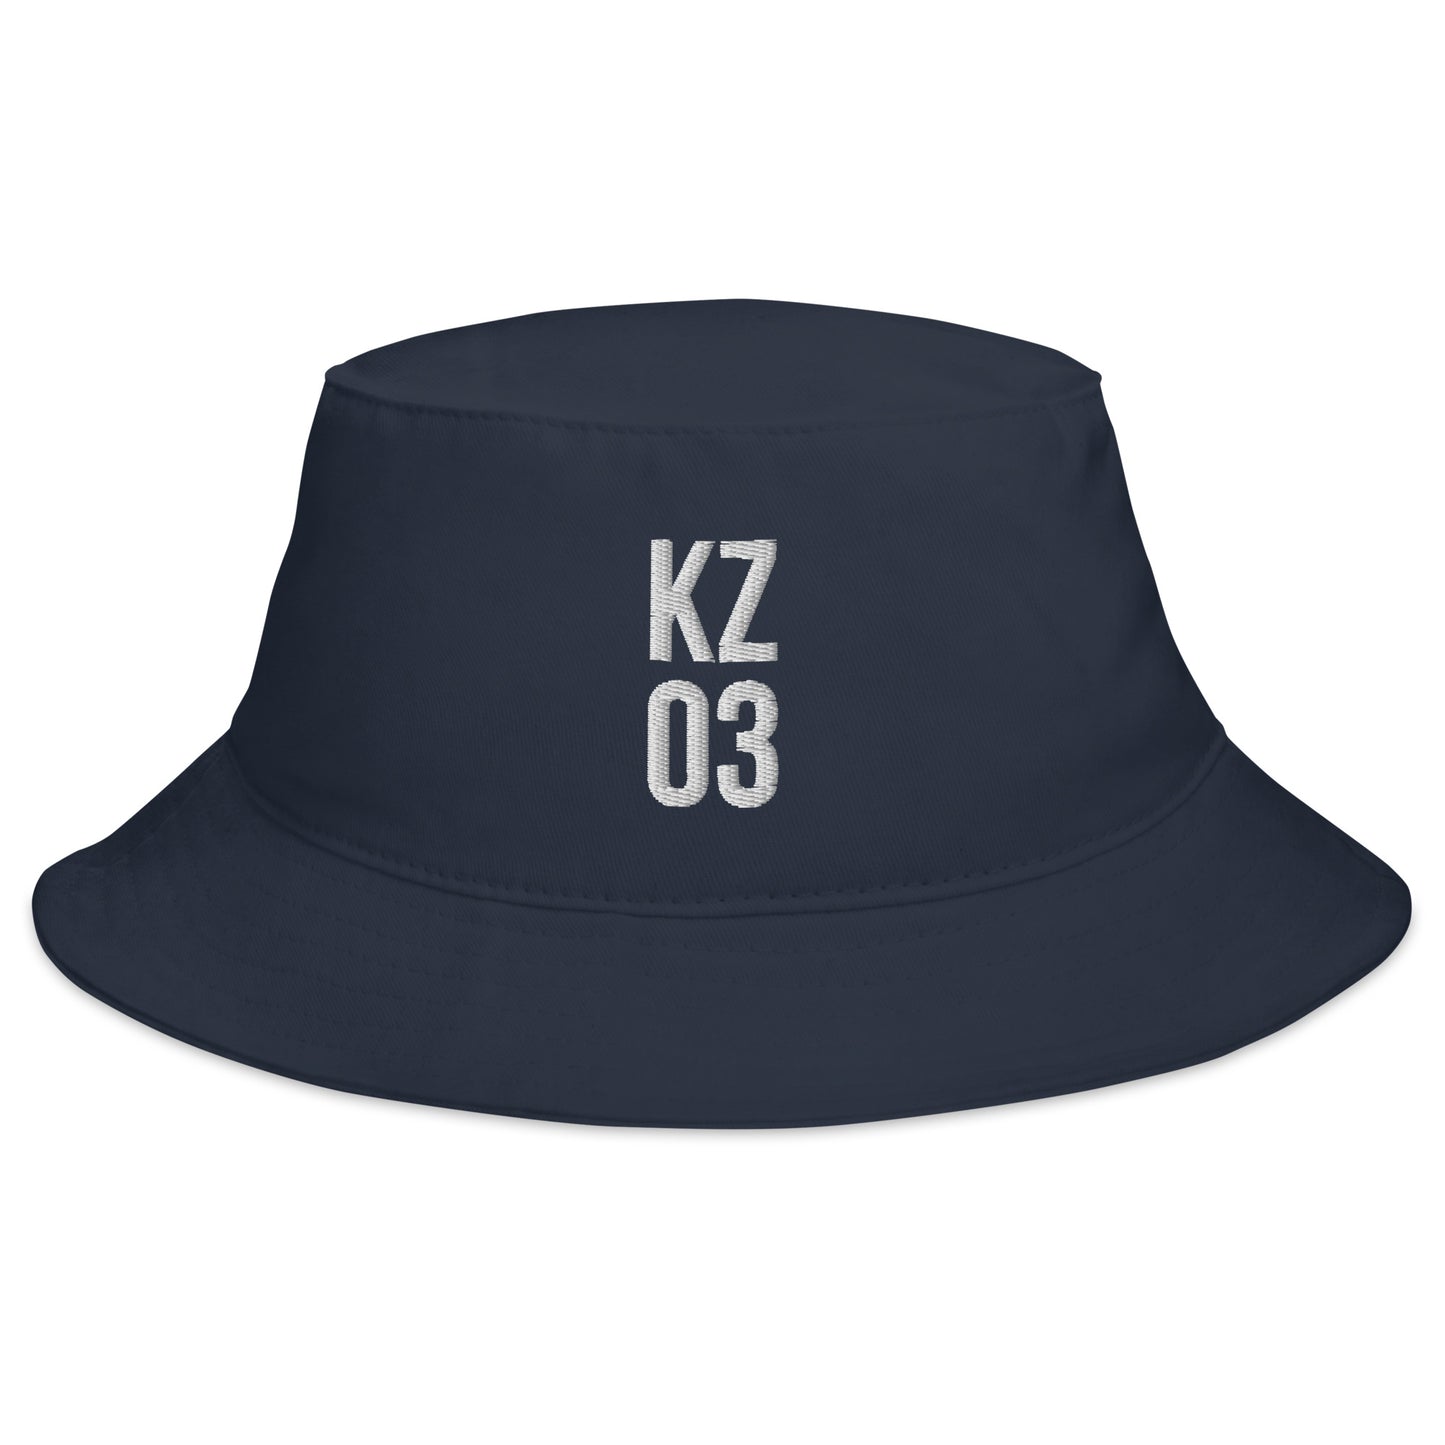 KZ 03 Bucket Hat